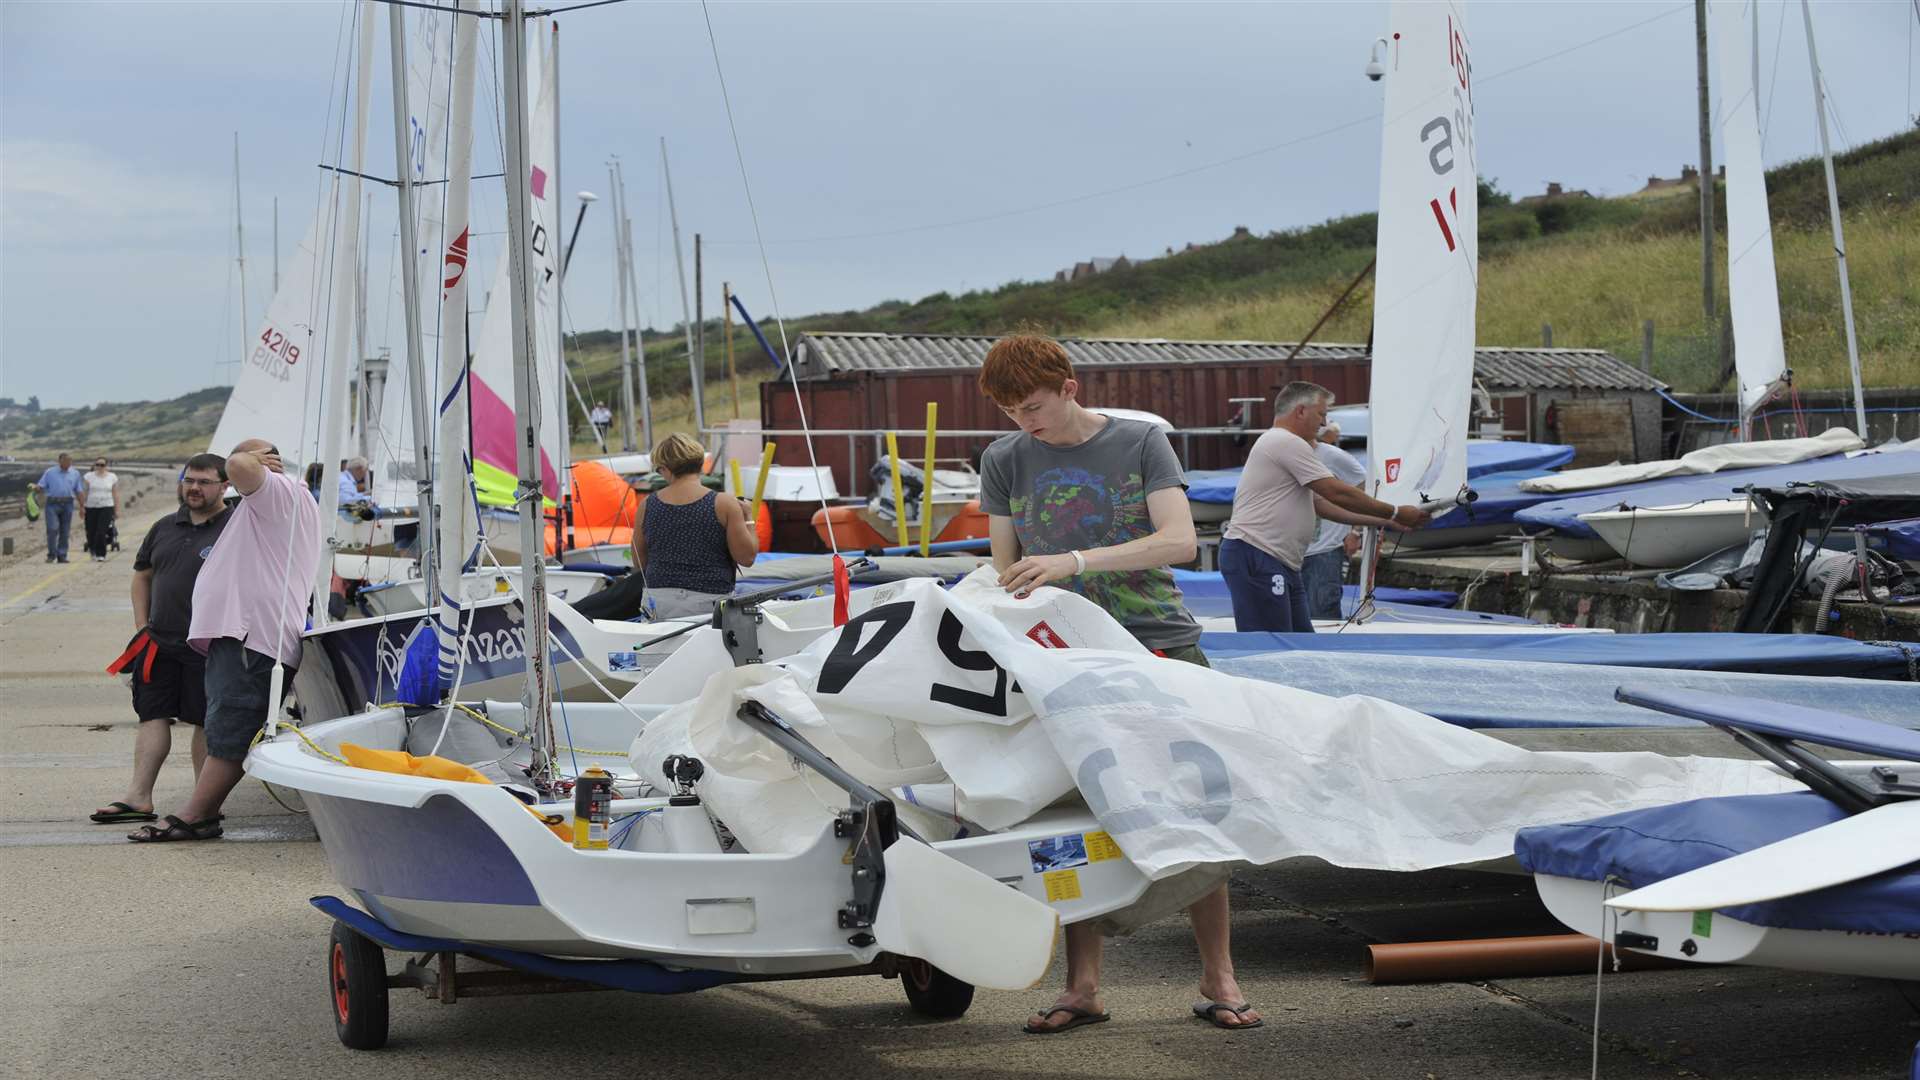 Investigators have contacted Herne Bay sailing club